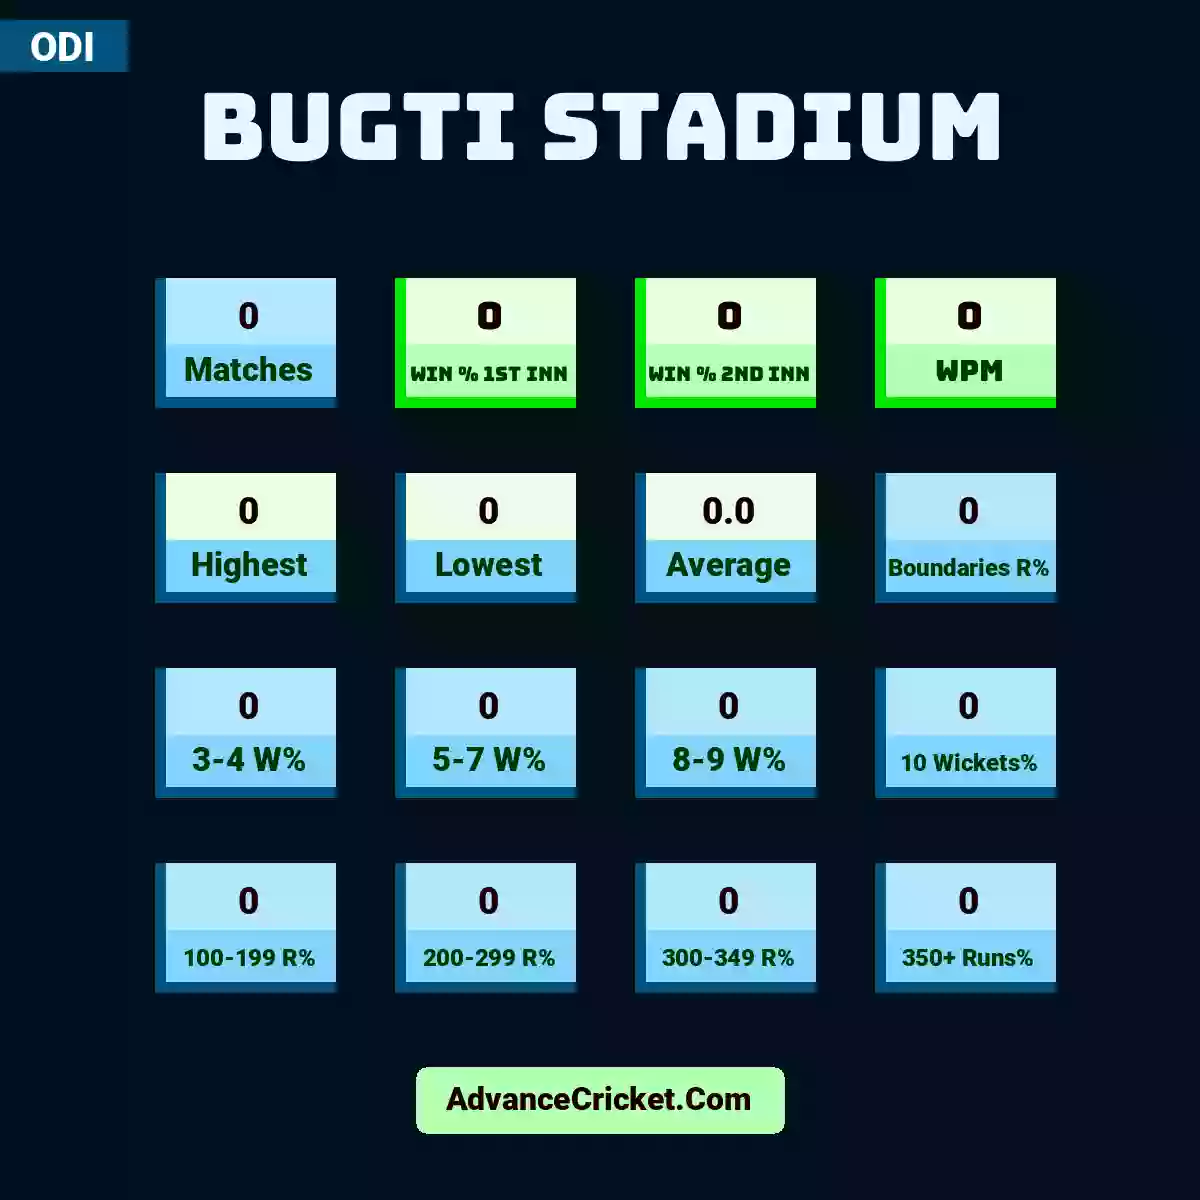 Image showing Bugti Stadium with Matches: 0, Win % 1st Inn: 0, Win % 2nd Inn: 0, WPM: 0, Highest: 0, Lowest: 0, Average: 0.0, Boundaries R%: 0, 3-4 W%: 0, 5-7 W%: 0, 8-9 W%: 0, 10 Wickets%: 0, 100-199 R%: 0, 200-299 R%: 0, 300-349 R%: 0, 350+ Runs%: 0.